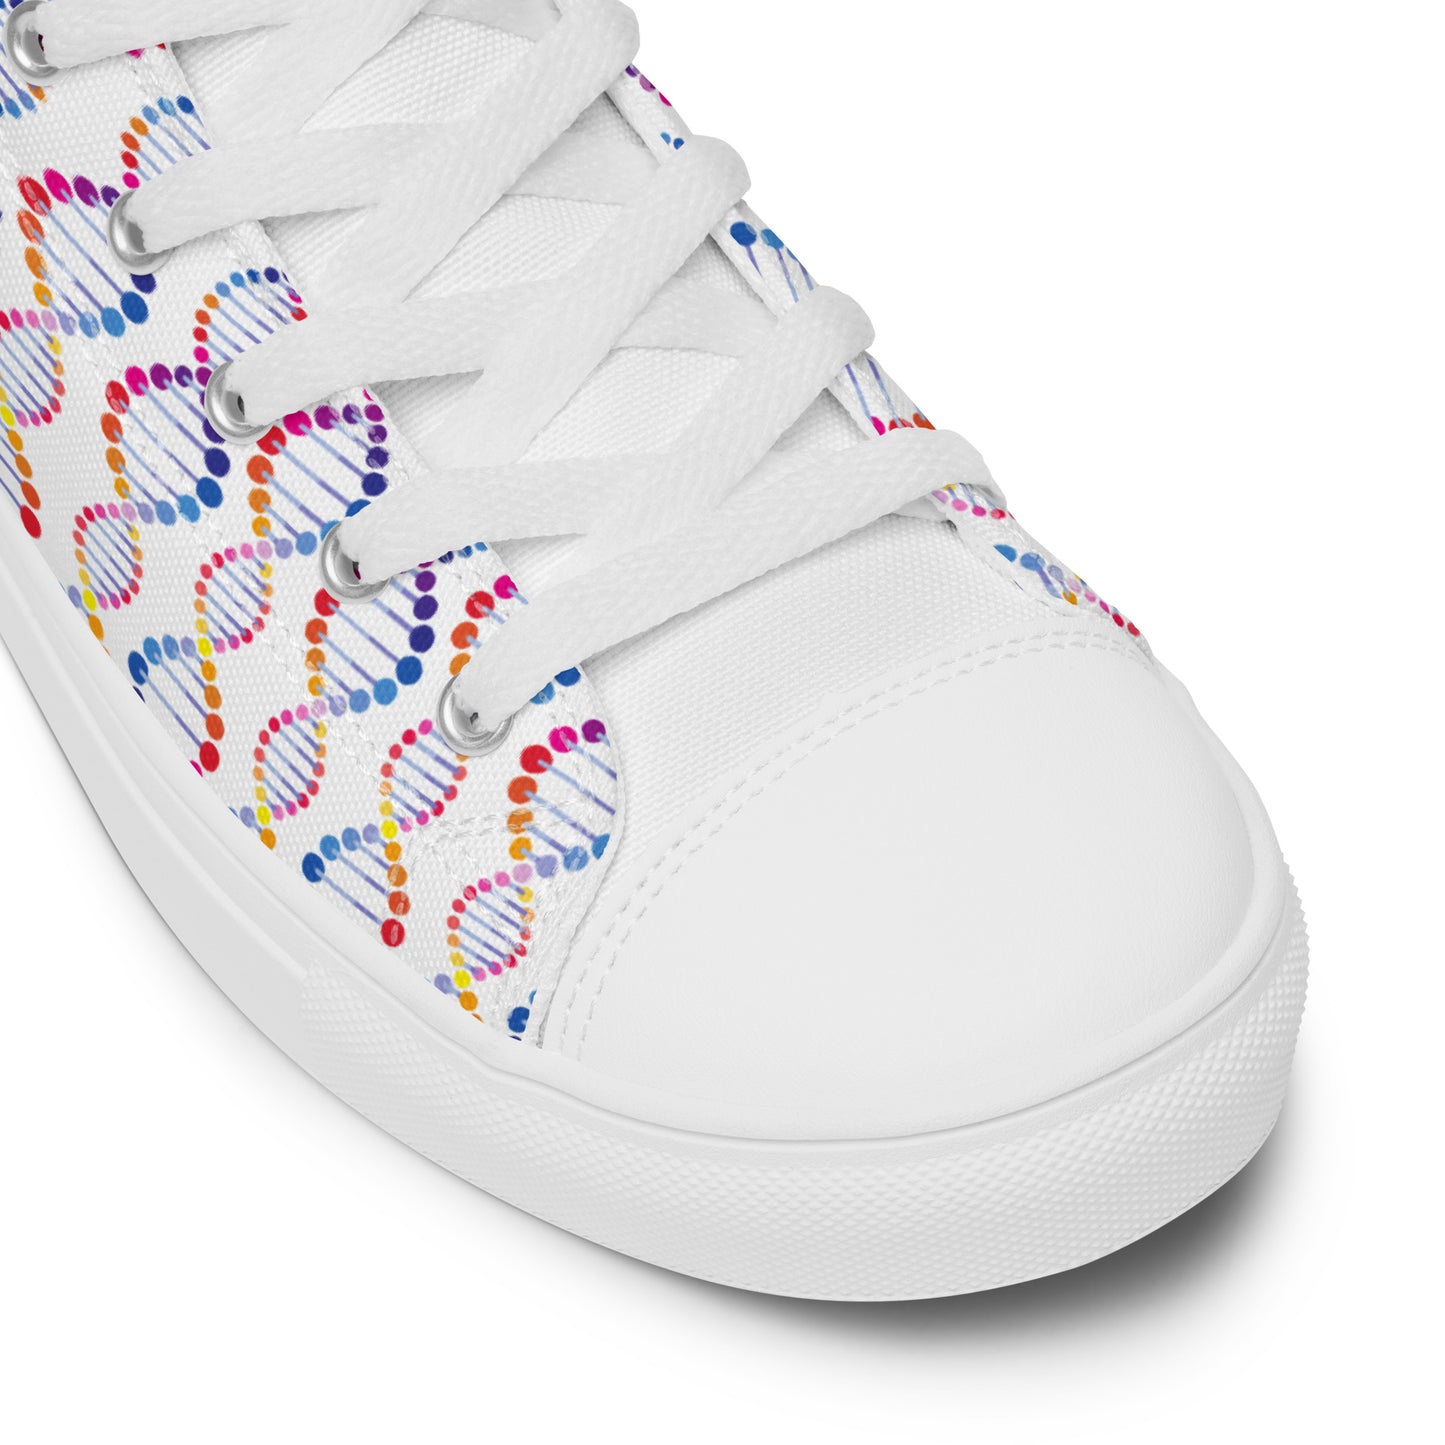 DNA - Men’s high top canvas shoes Mens High Top Shoes Outside Australia